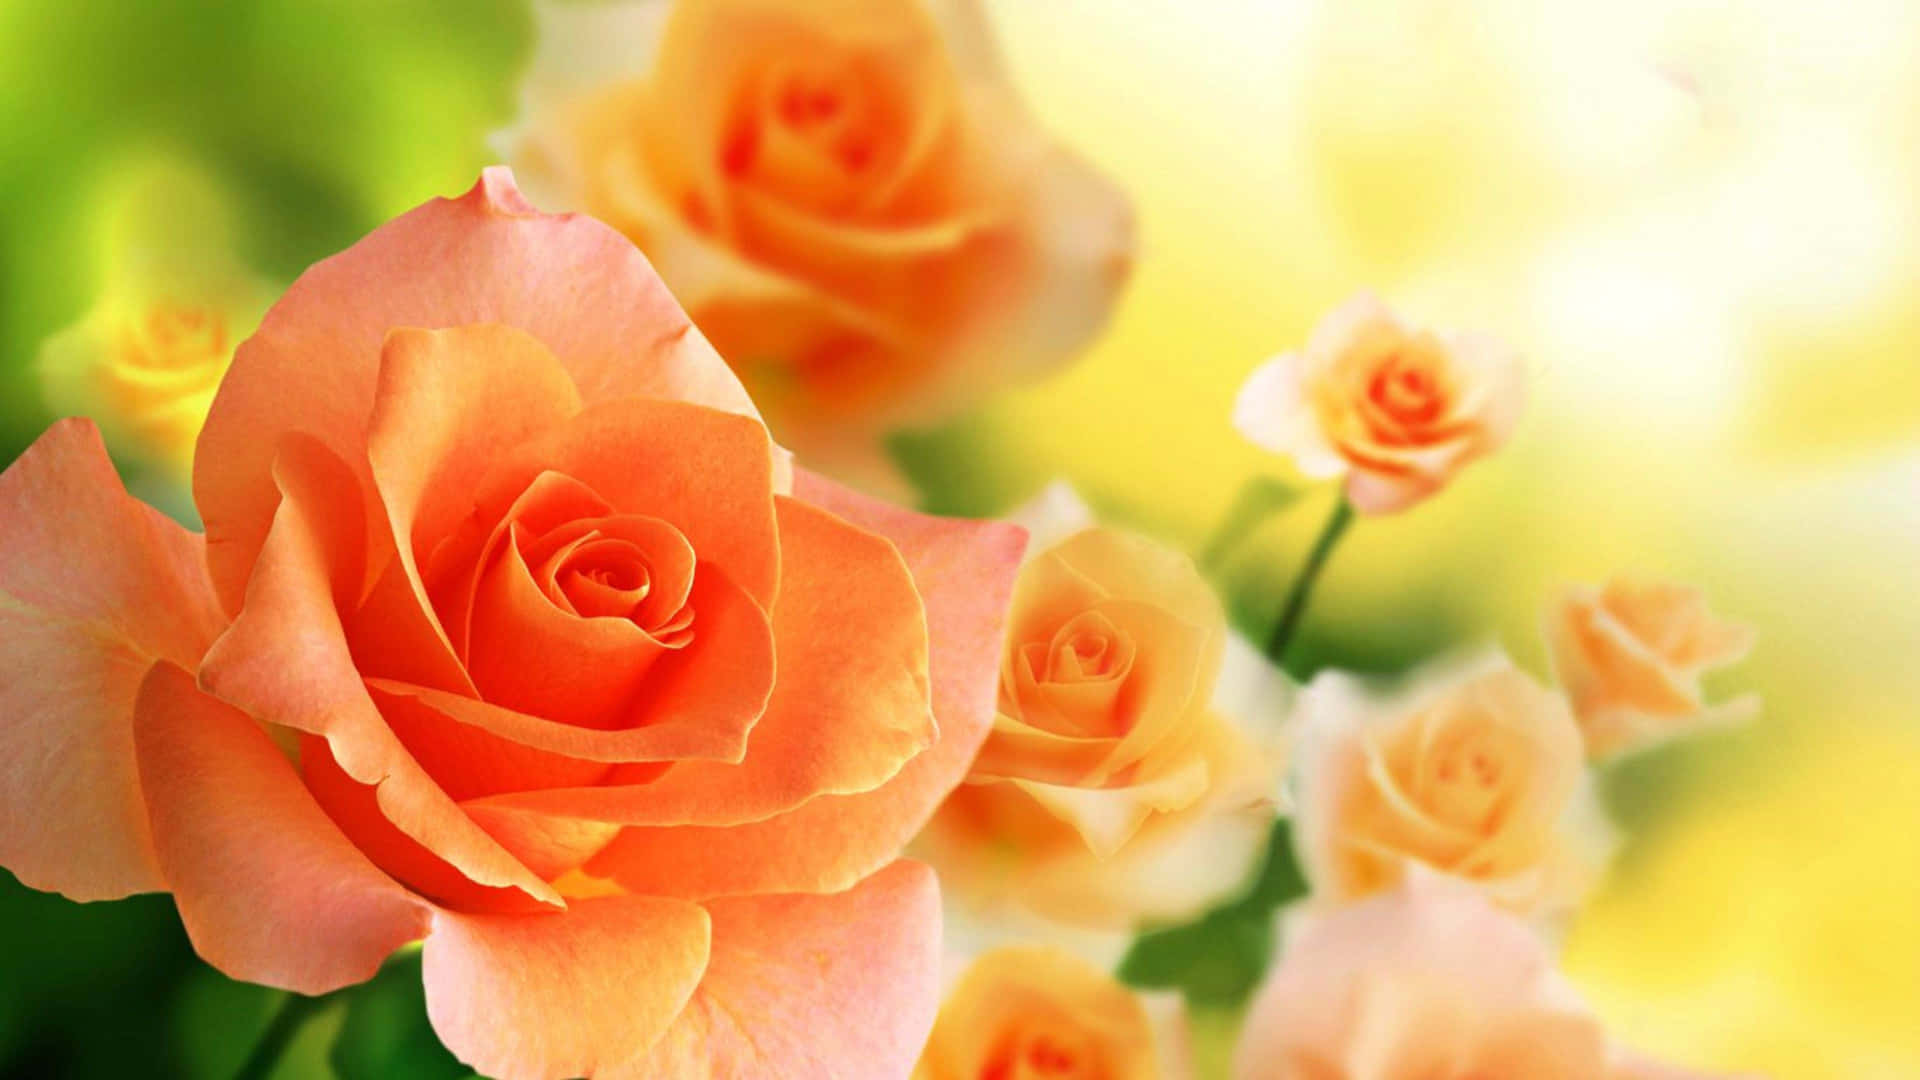 Blurred Peach Rose Flowers Background